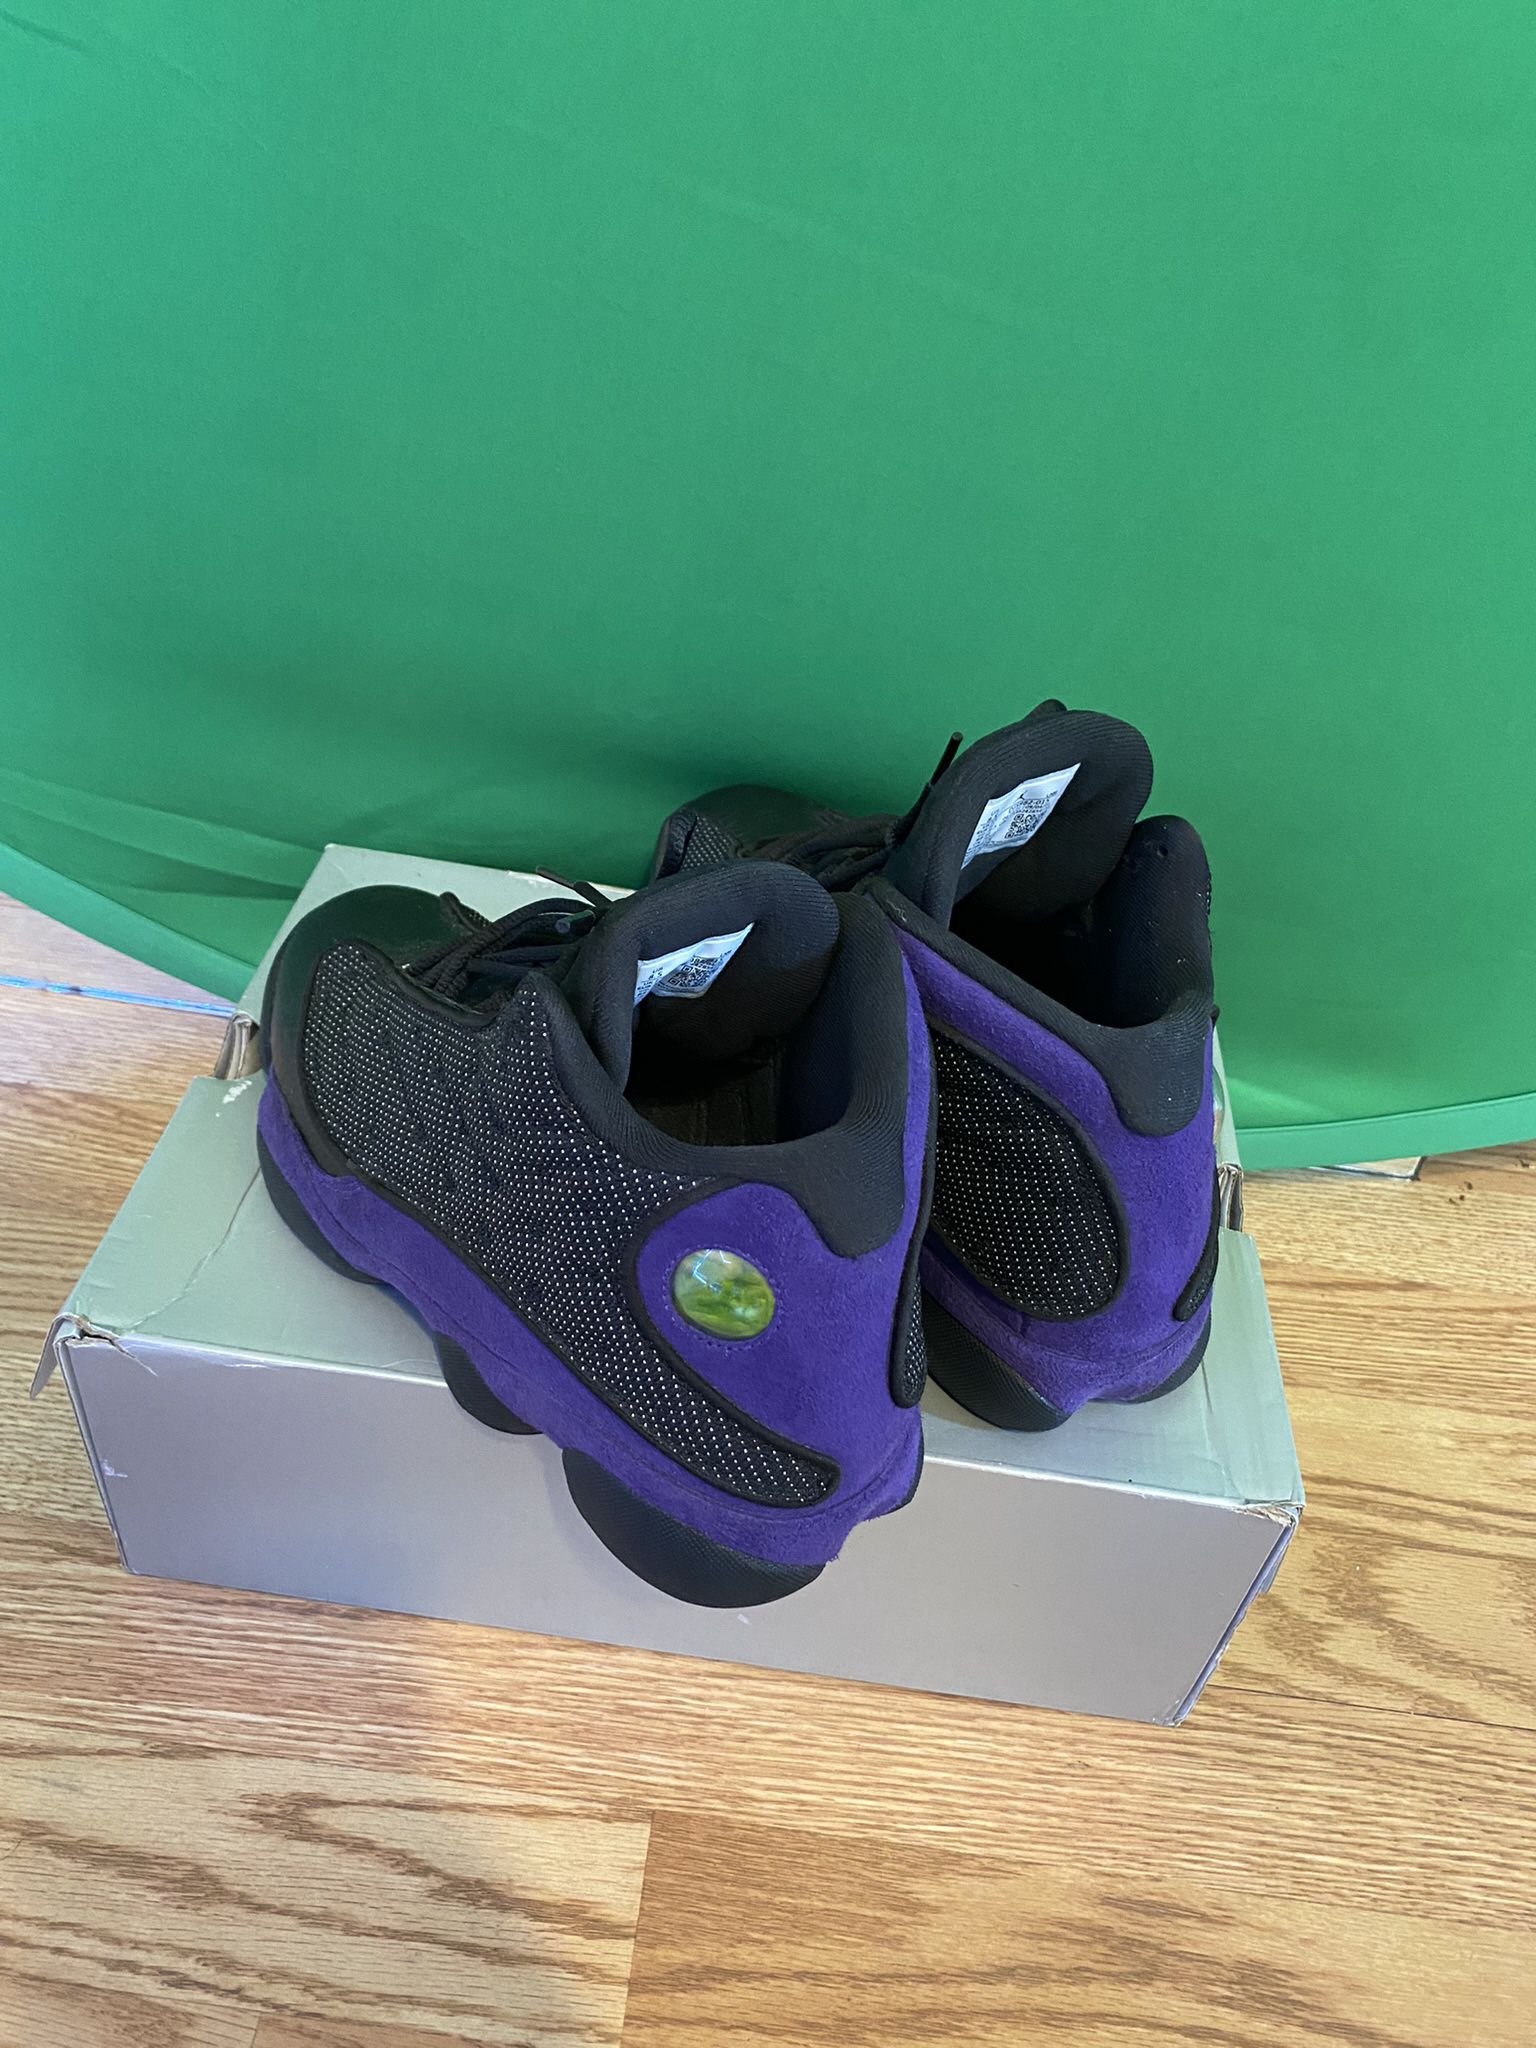 Jordan 13 Court Purple 10.5 for Sale in Orlando, FL - OfferUp